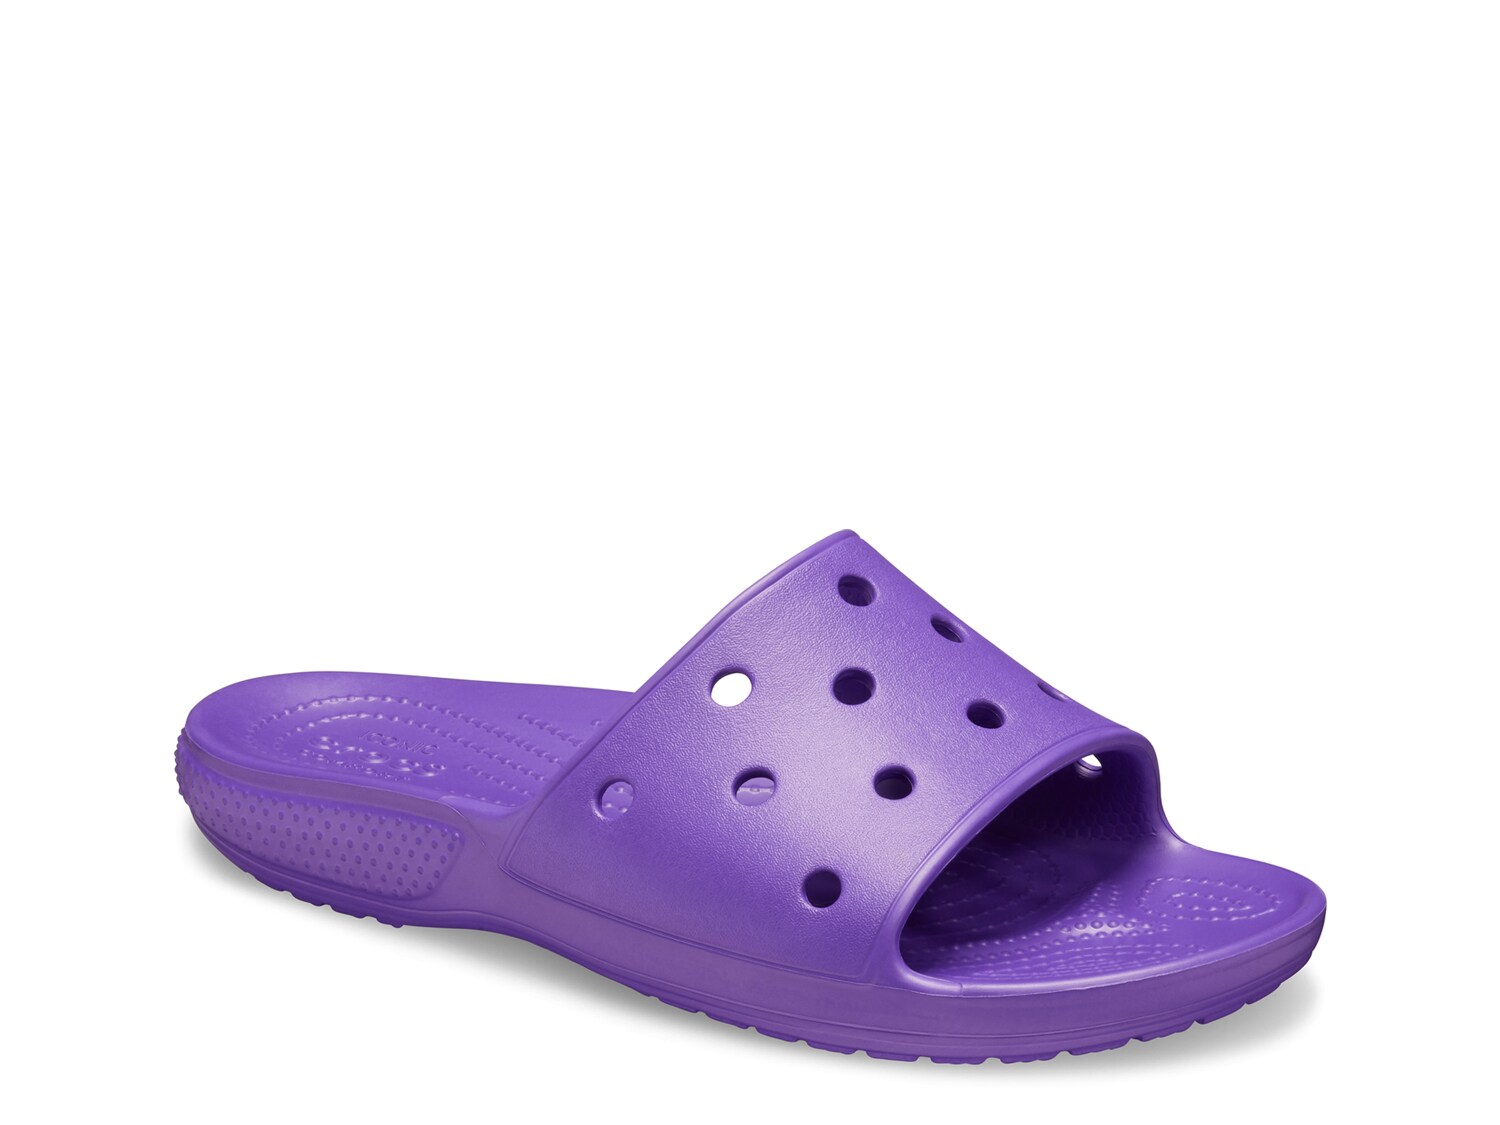 dsw crocs sandals